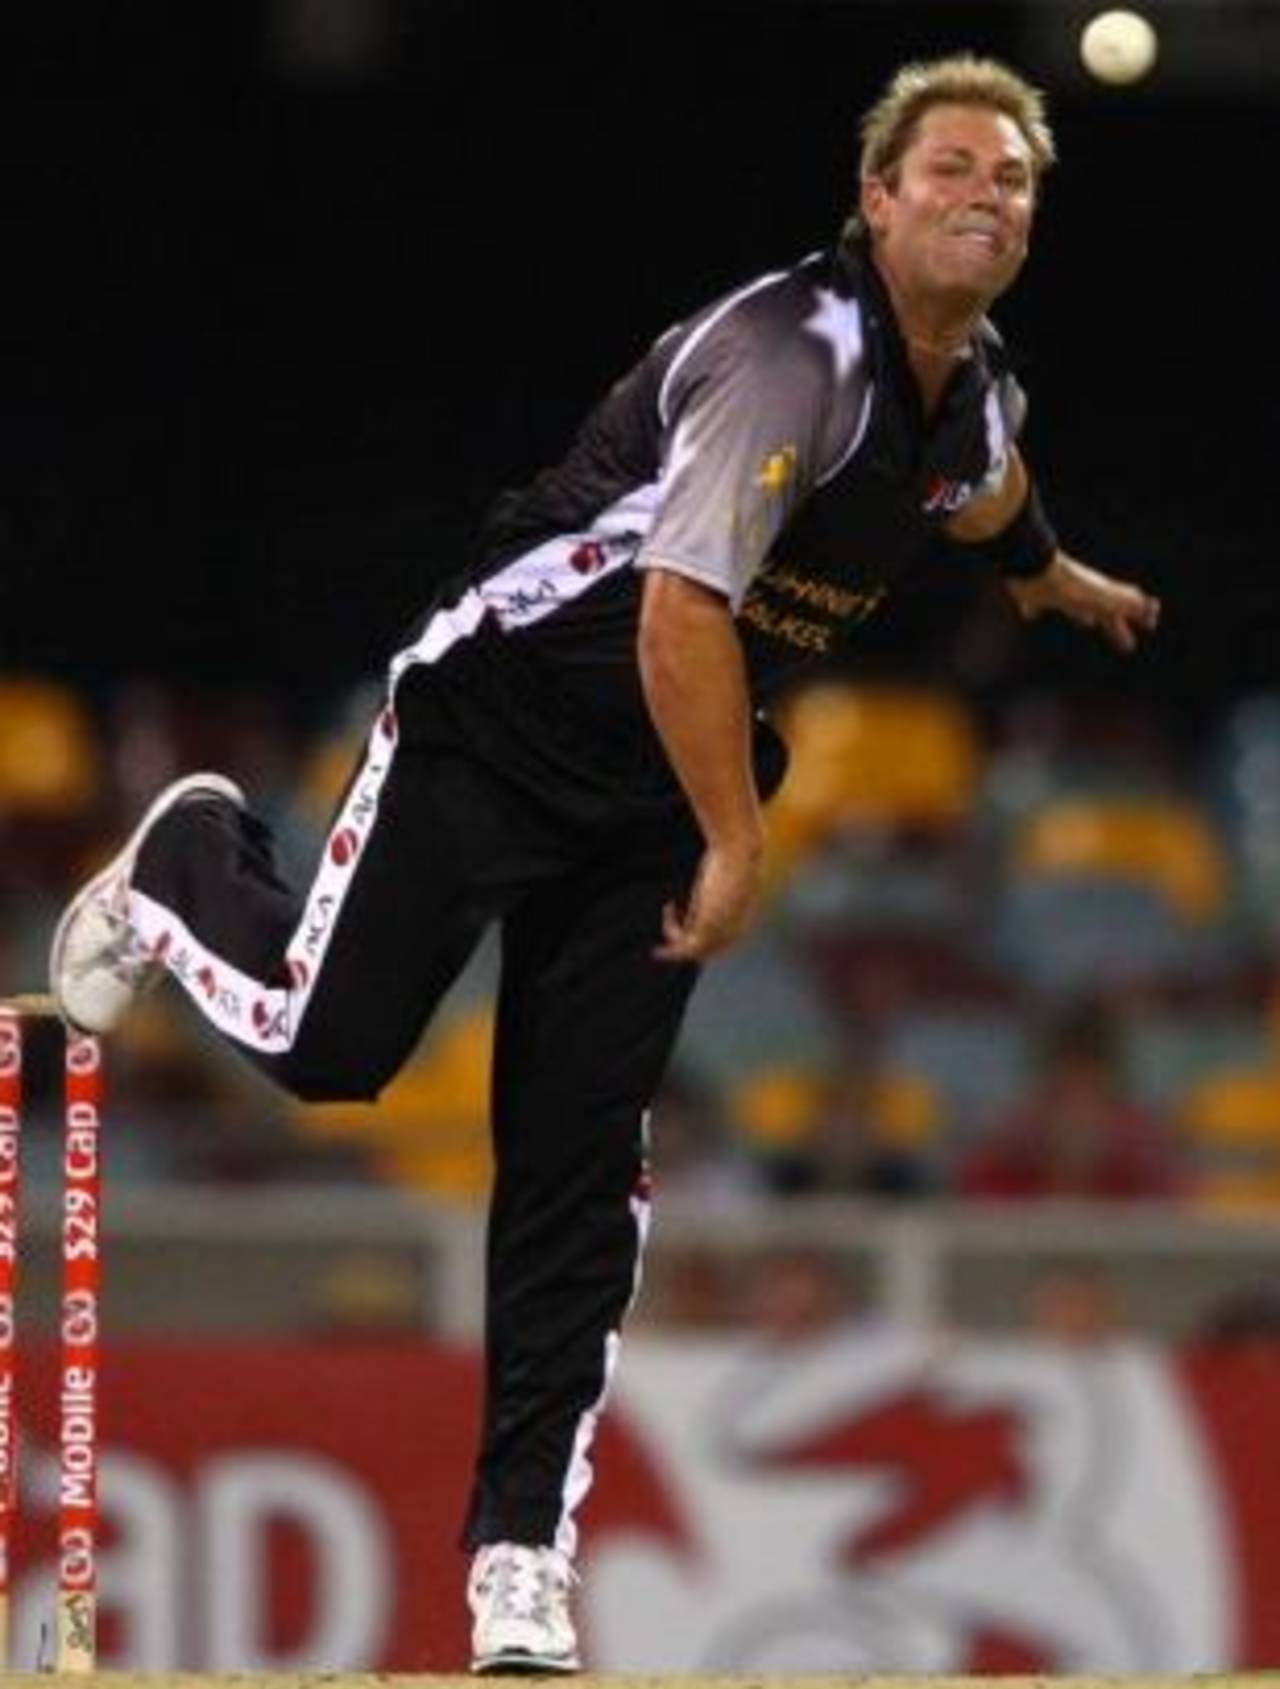 Shane Warne spins one down, Australian Cricketers' Association XI v Australian XI, Brisbane, November 22, 2009